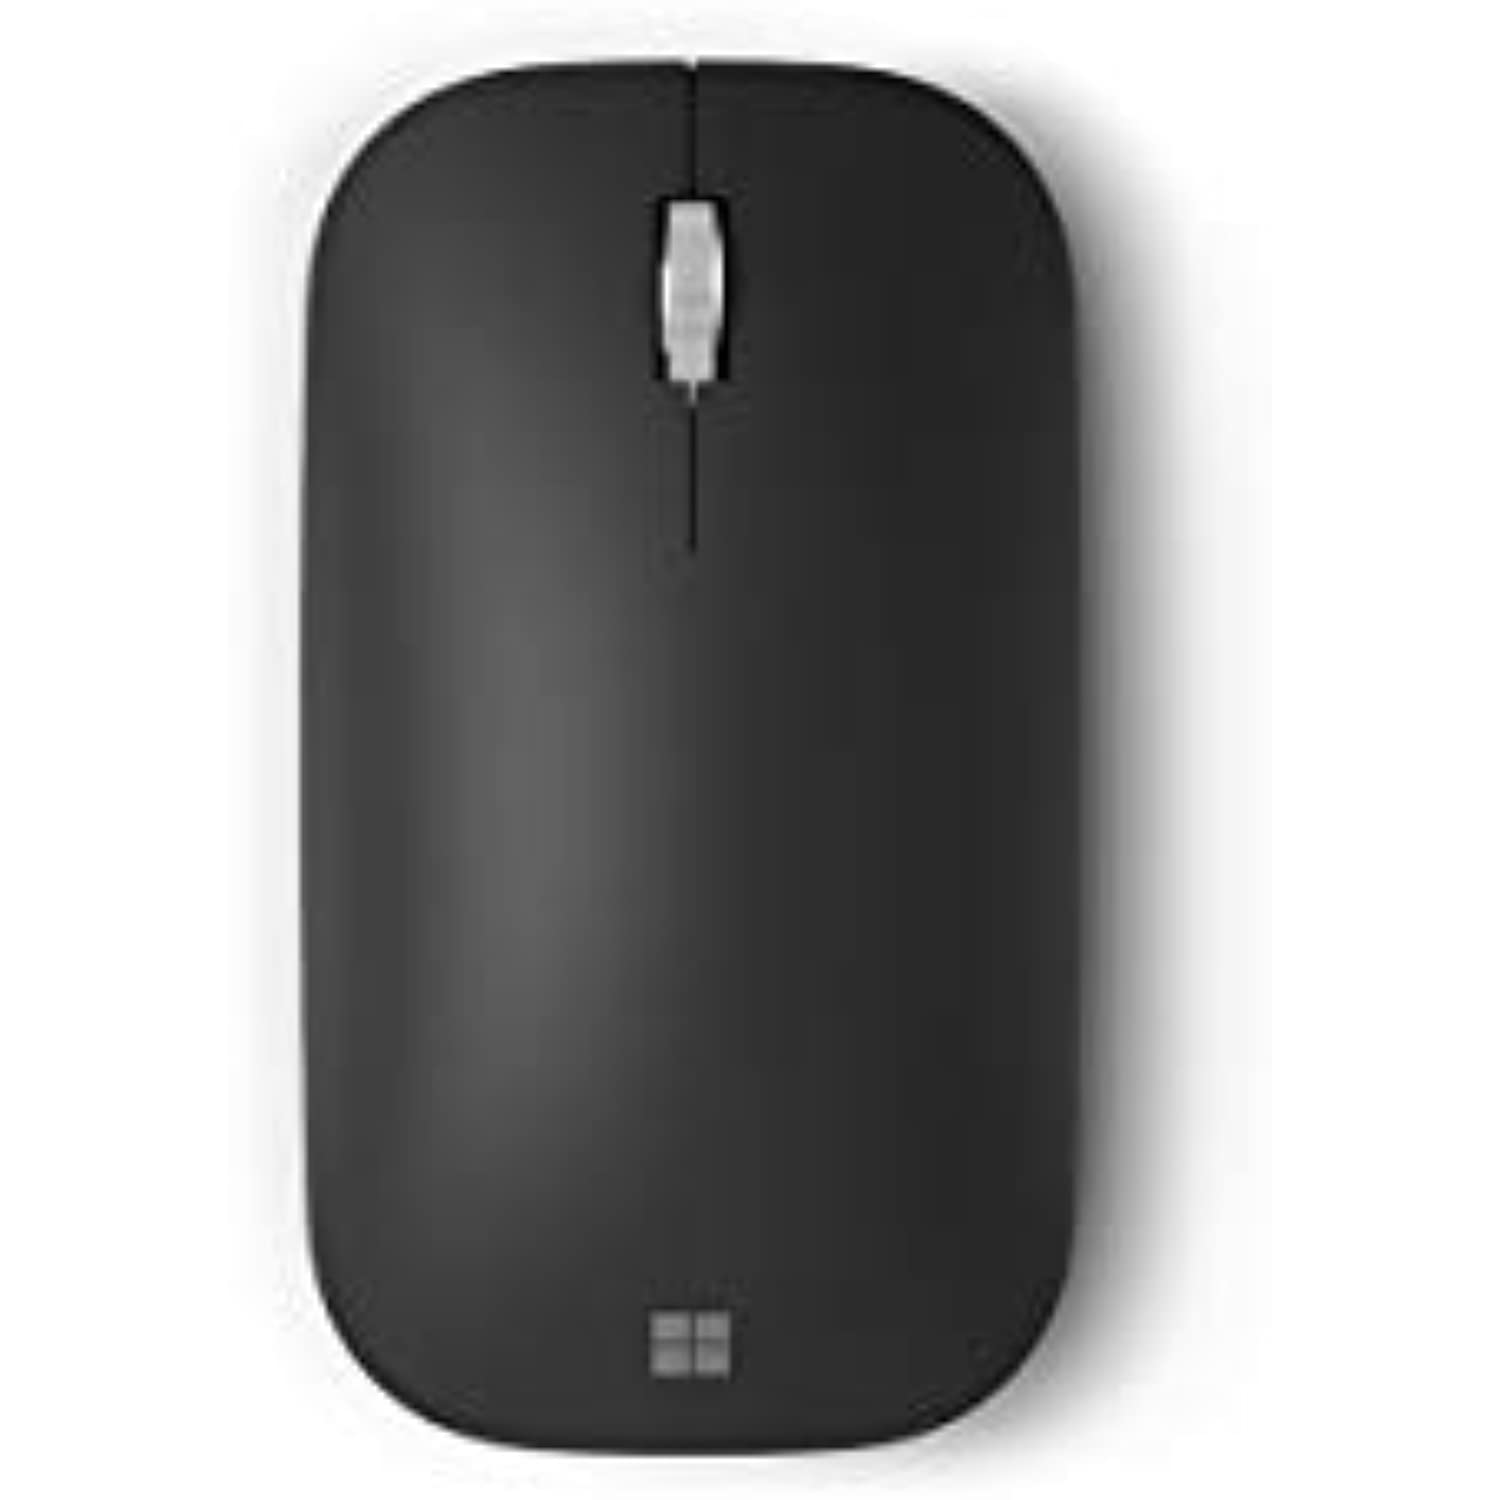 Microsoft - KTF-00013 Modern Mobile Wireless BlueTrack Mouse - Black